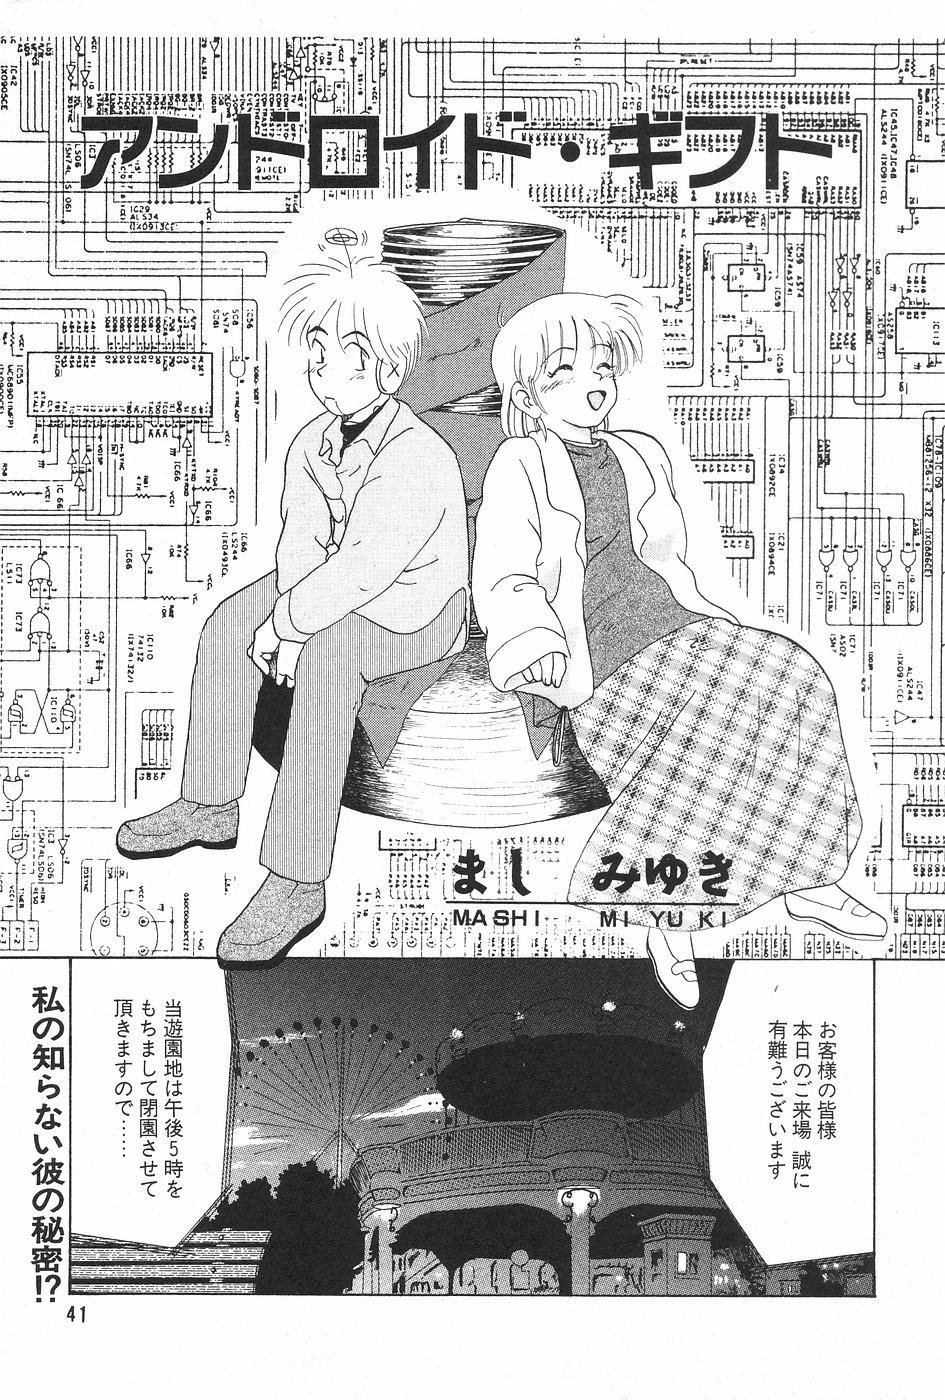 Manga Hotmilk 1997-05 40